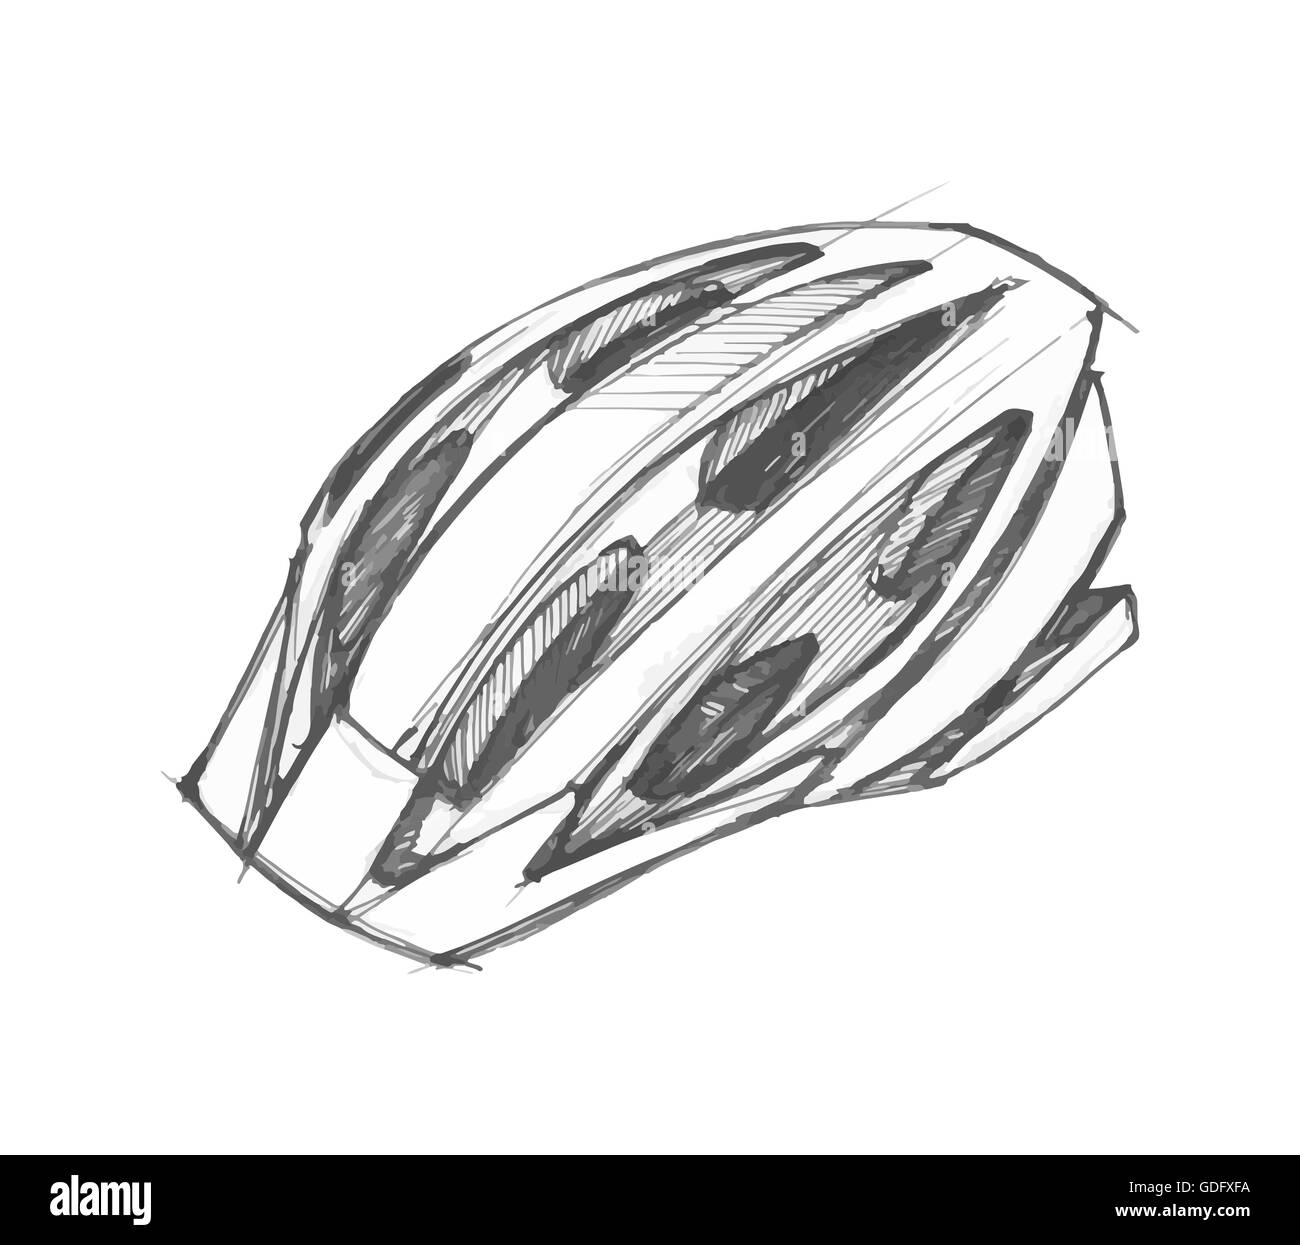 Vector illustration ou dessin d'un casque de cycliste Photo Stock - Alamy